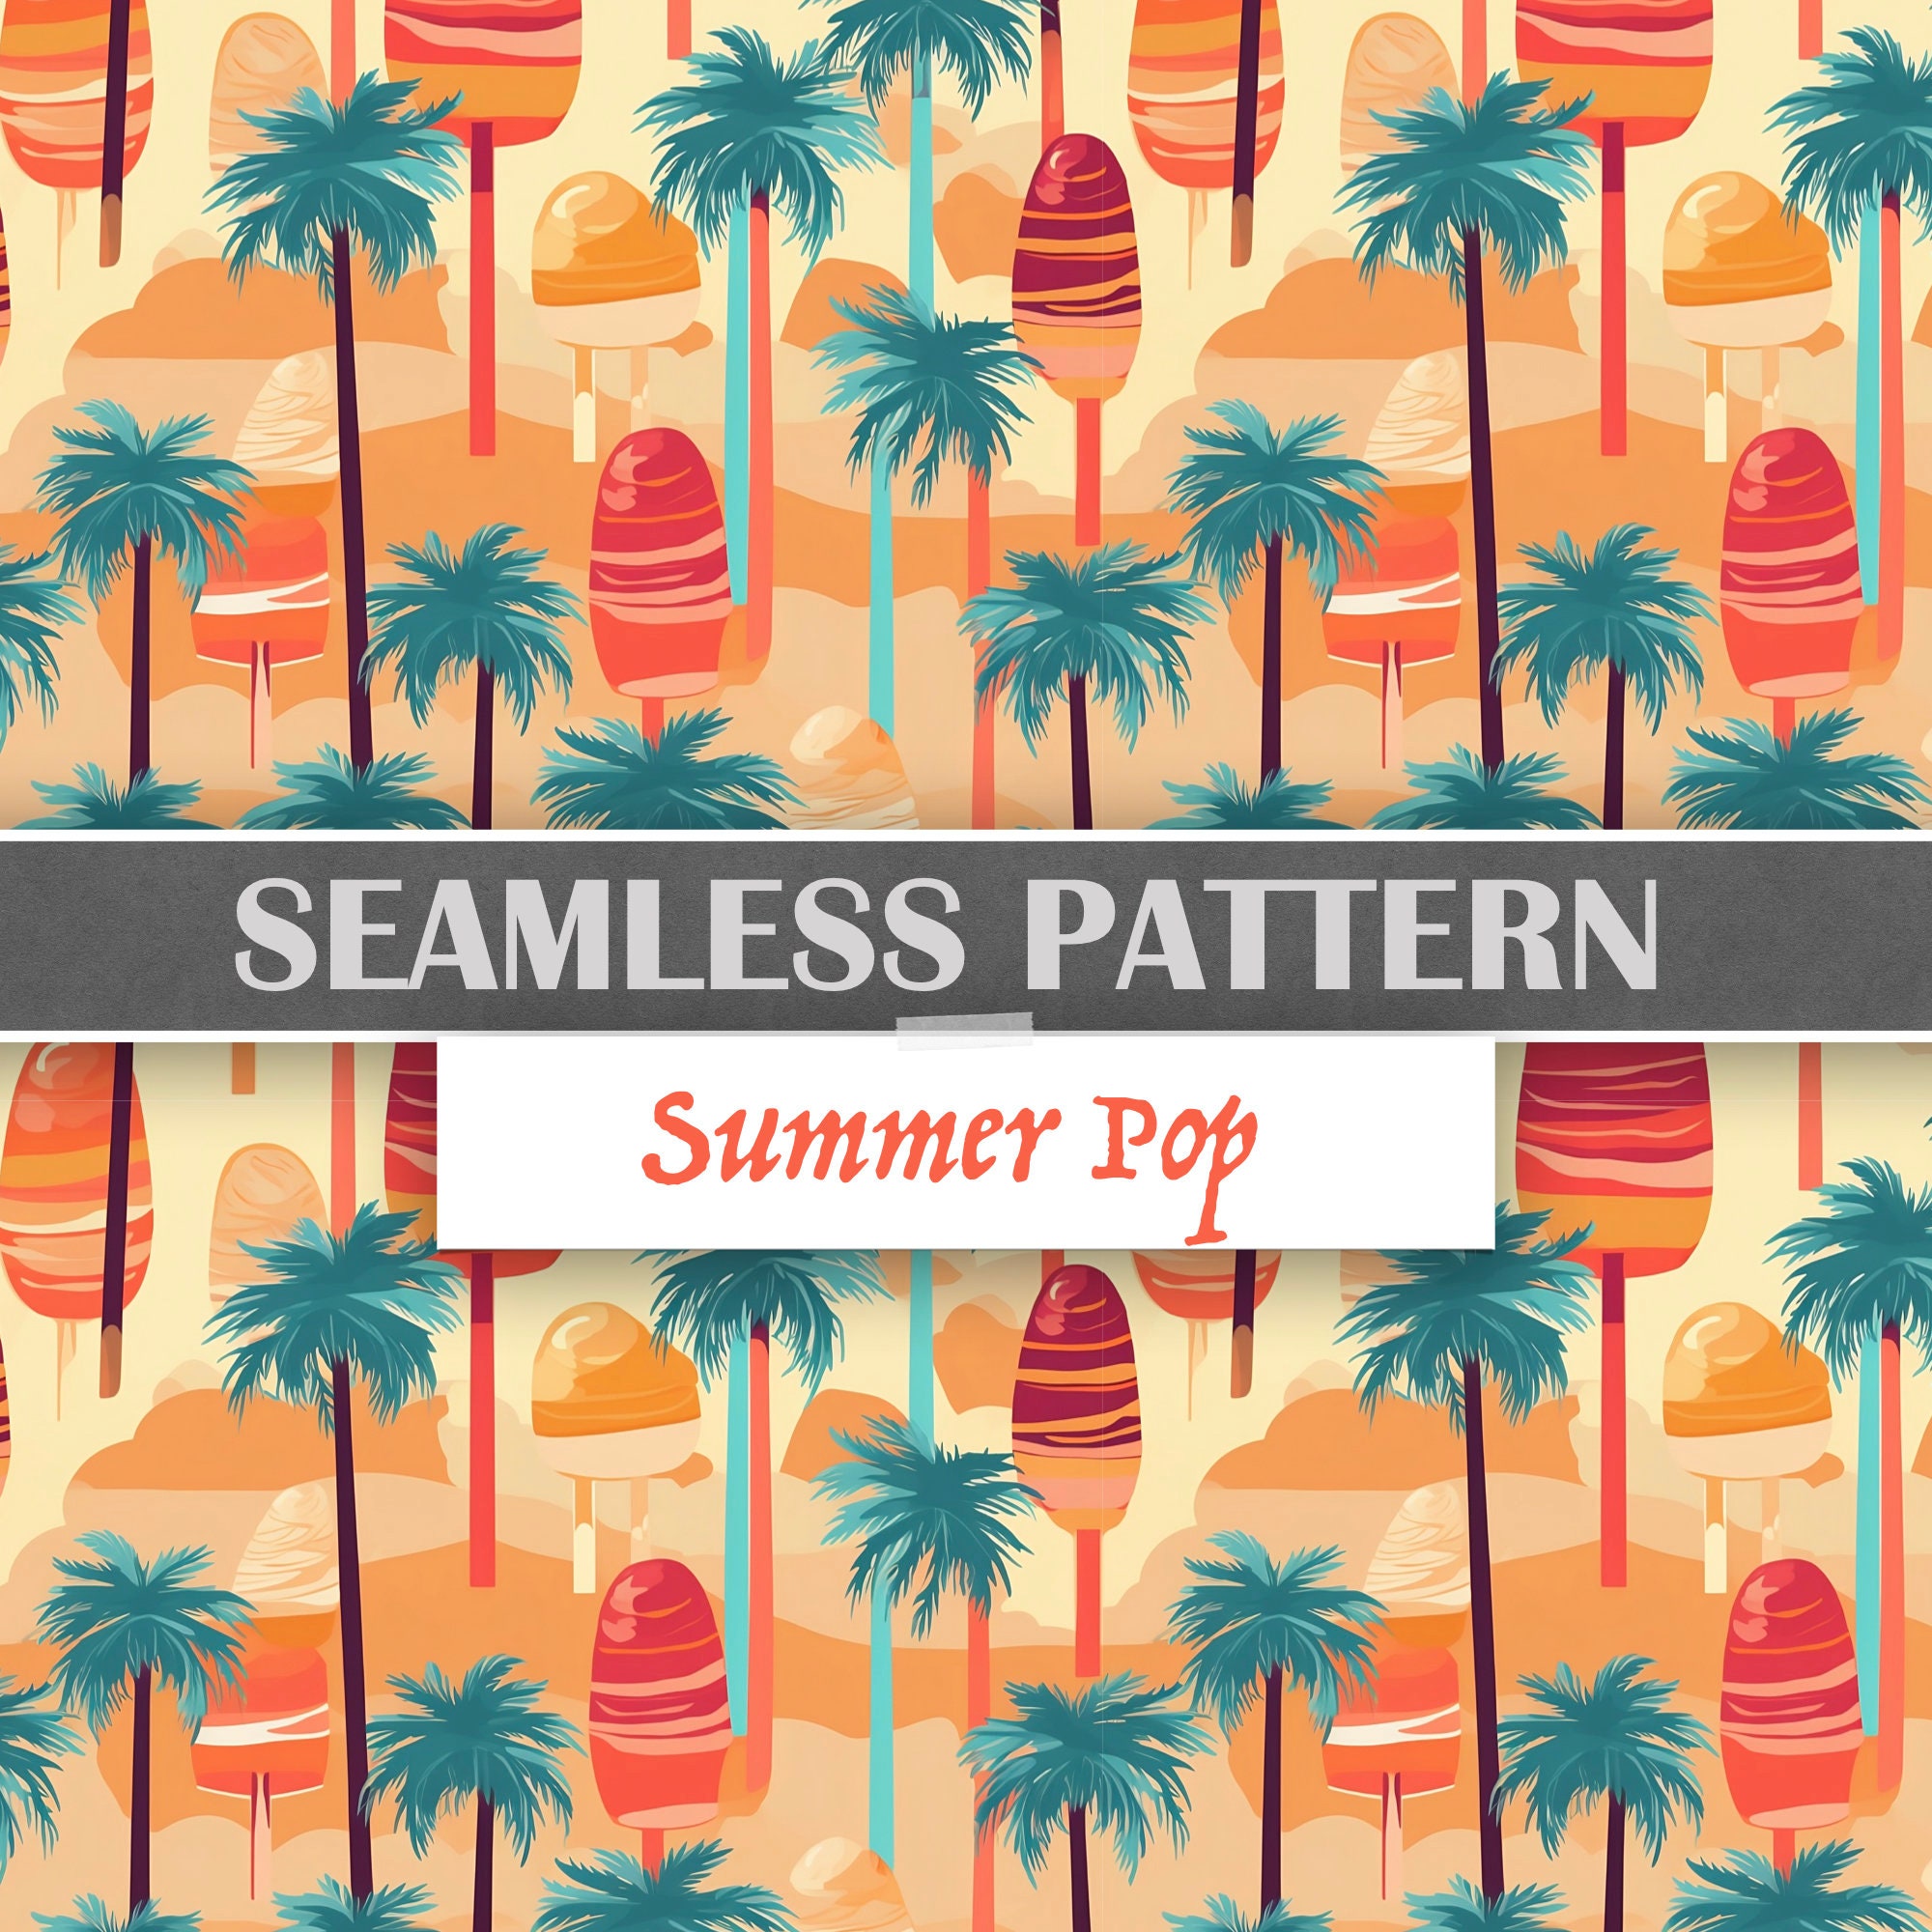 6 POP seamless patterns By Som_Stock